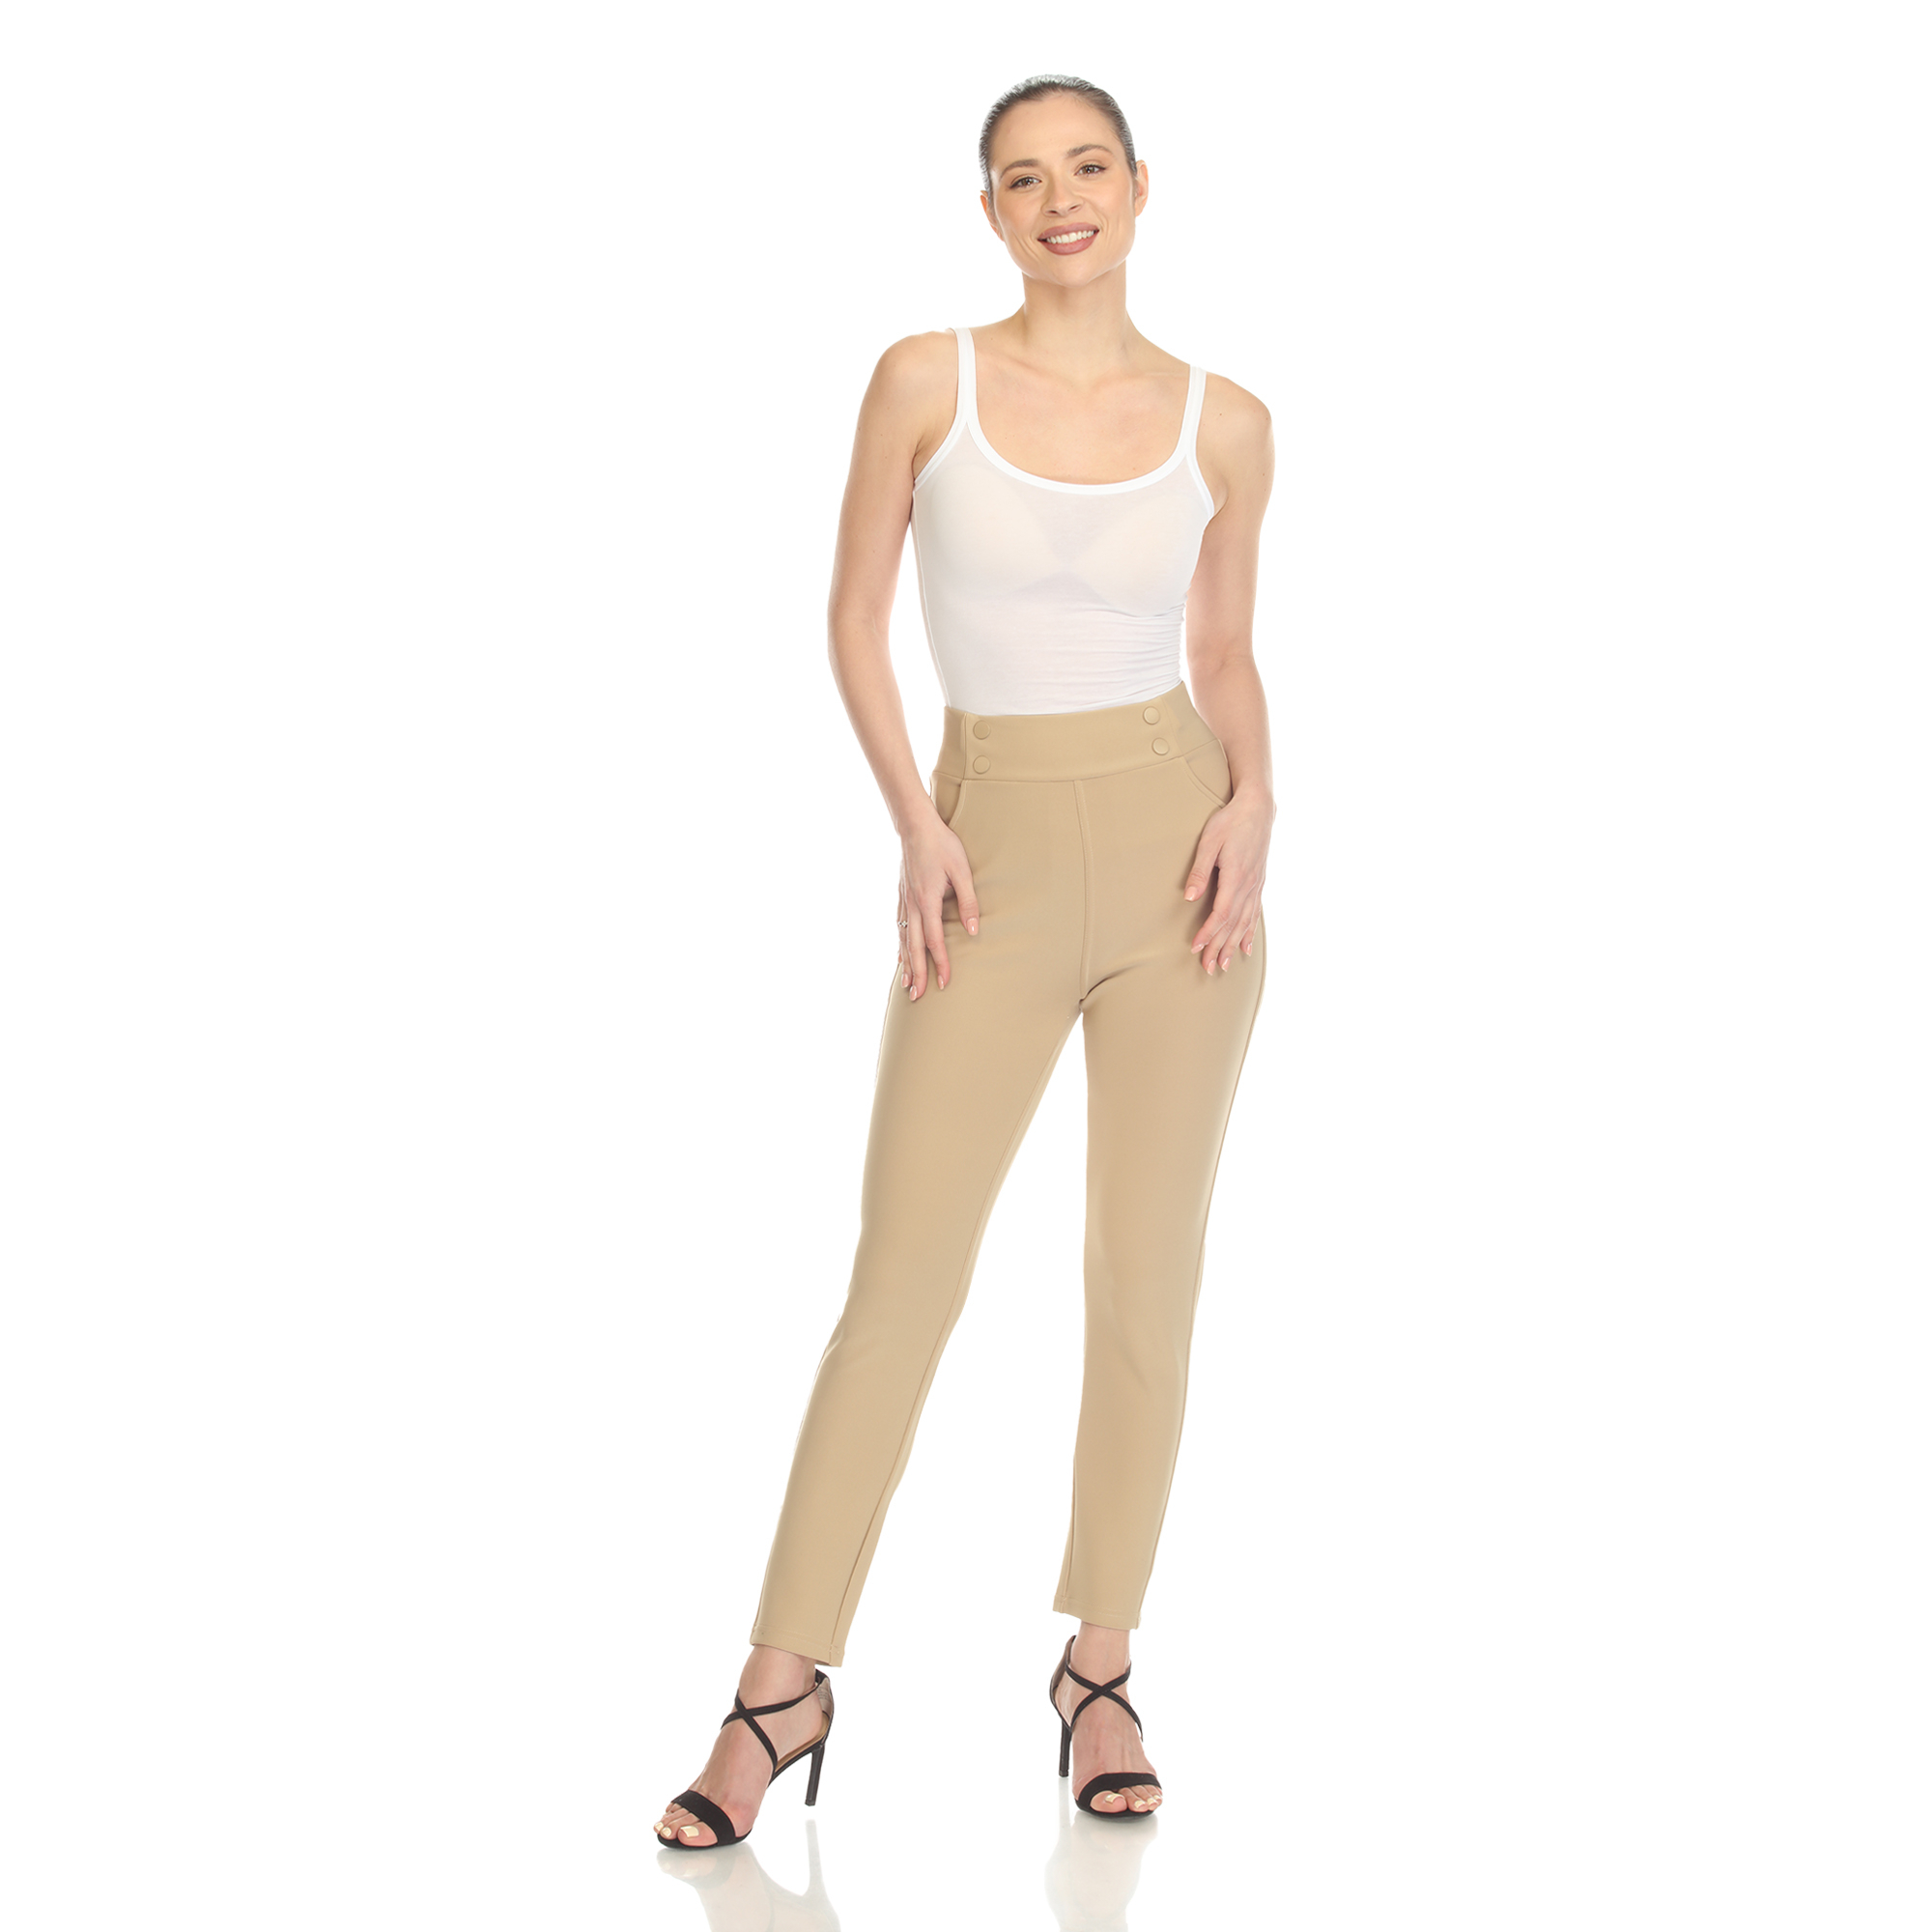 White Mark Women's Super Soft Elastic Waistband High Waist Scuba Pants With Pockets - Beige, Small